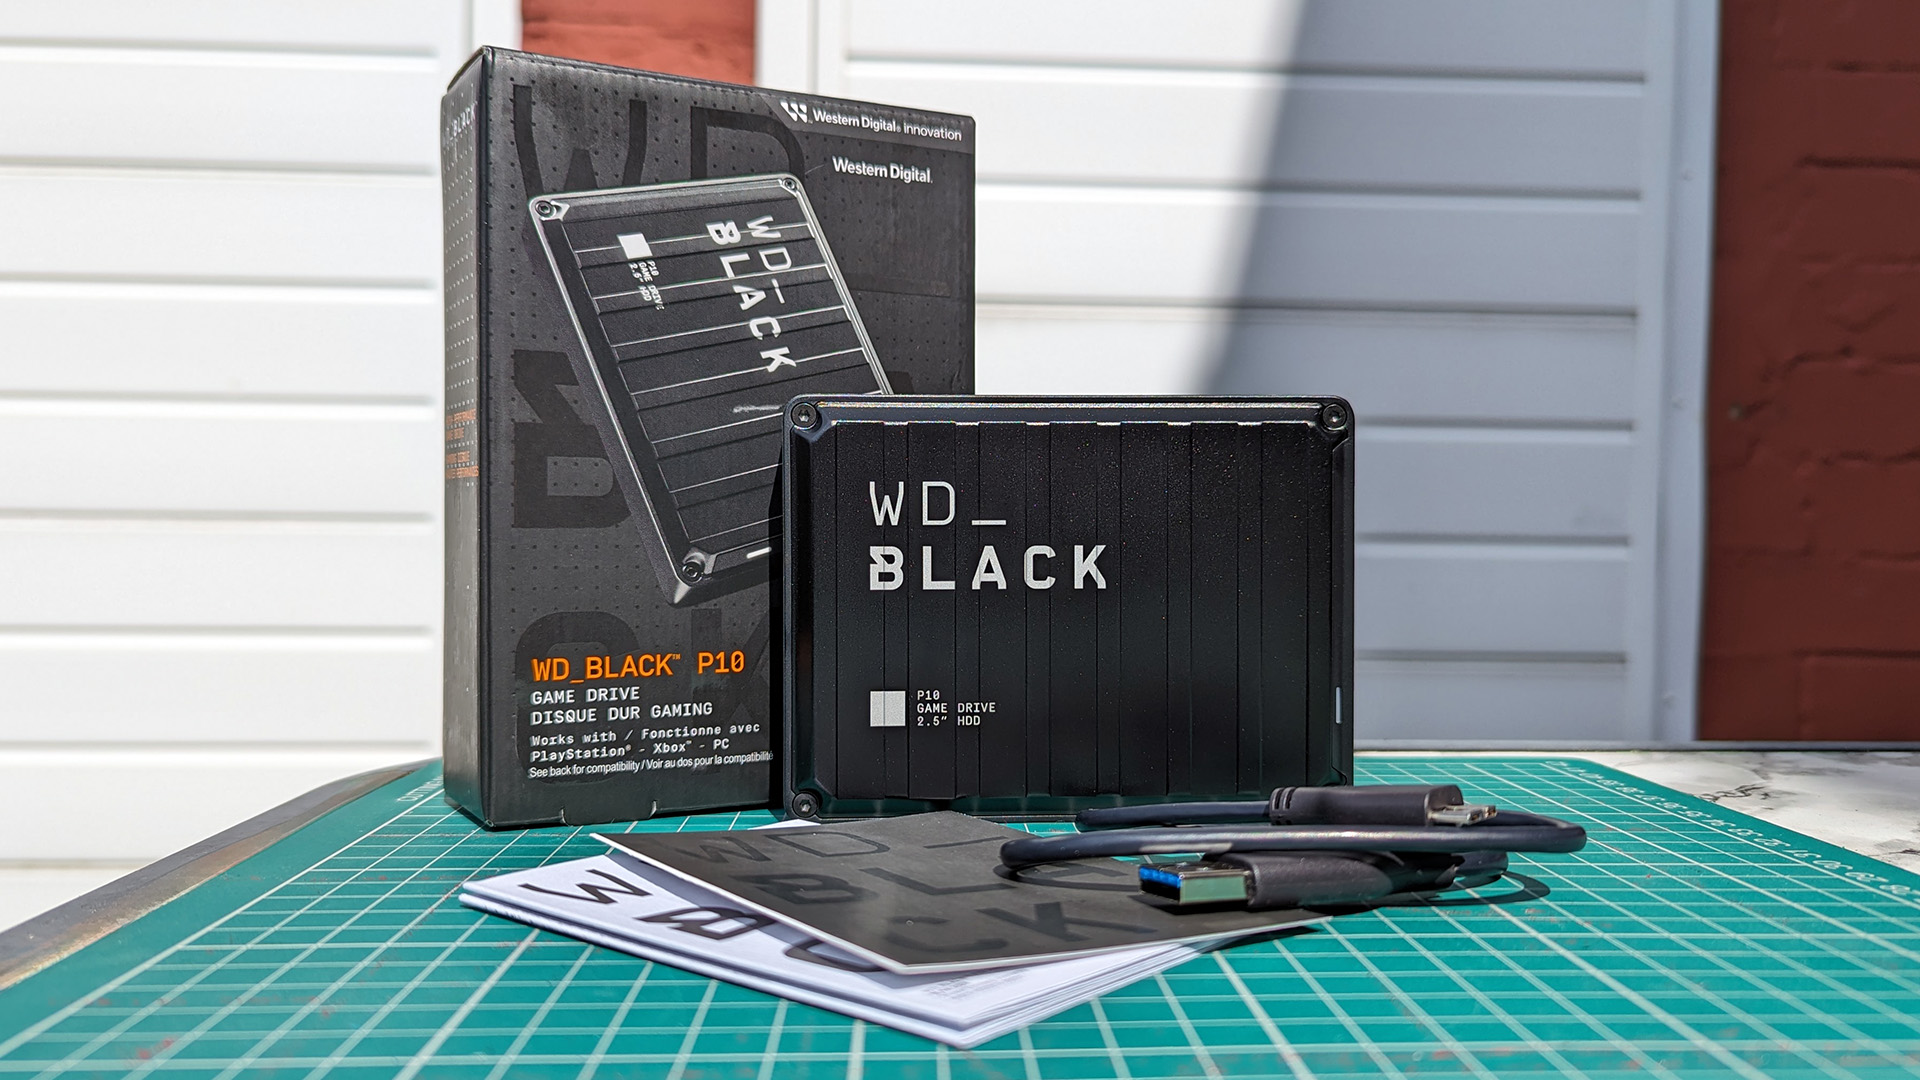 WD_BLACK P10 Game Drive kutusu açılmamış